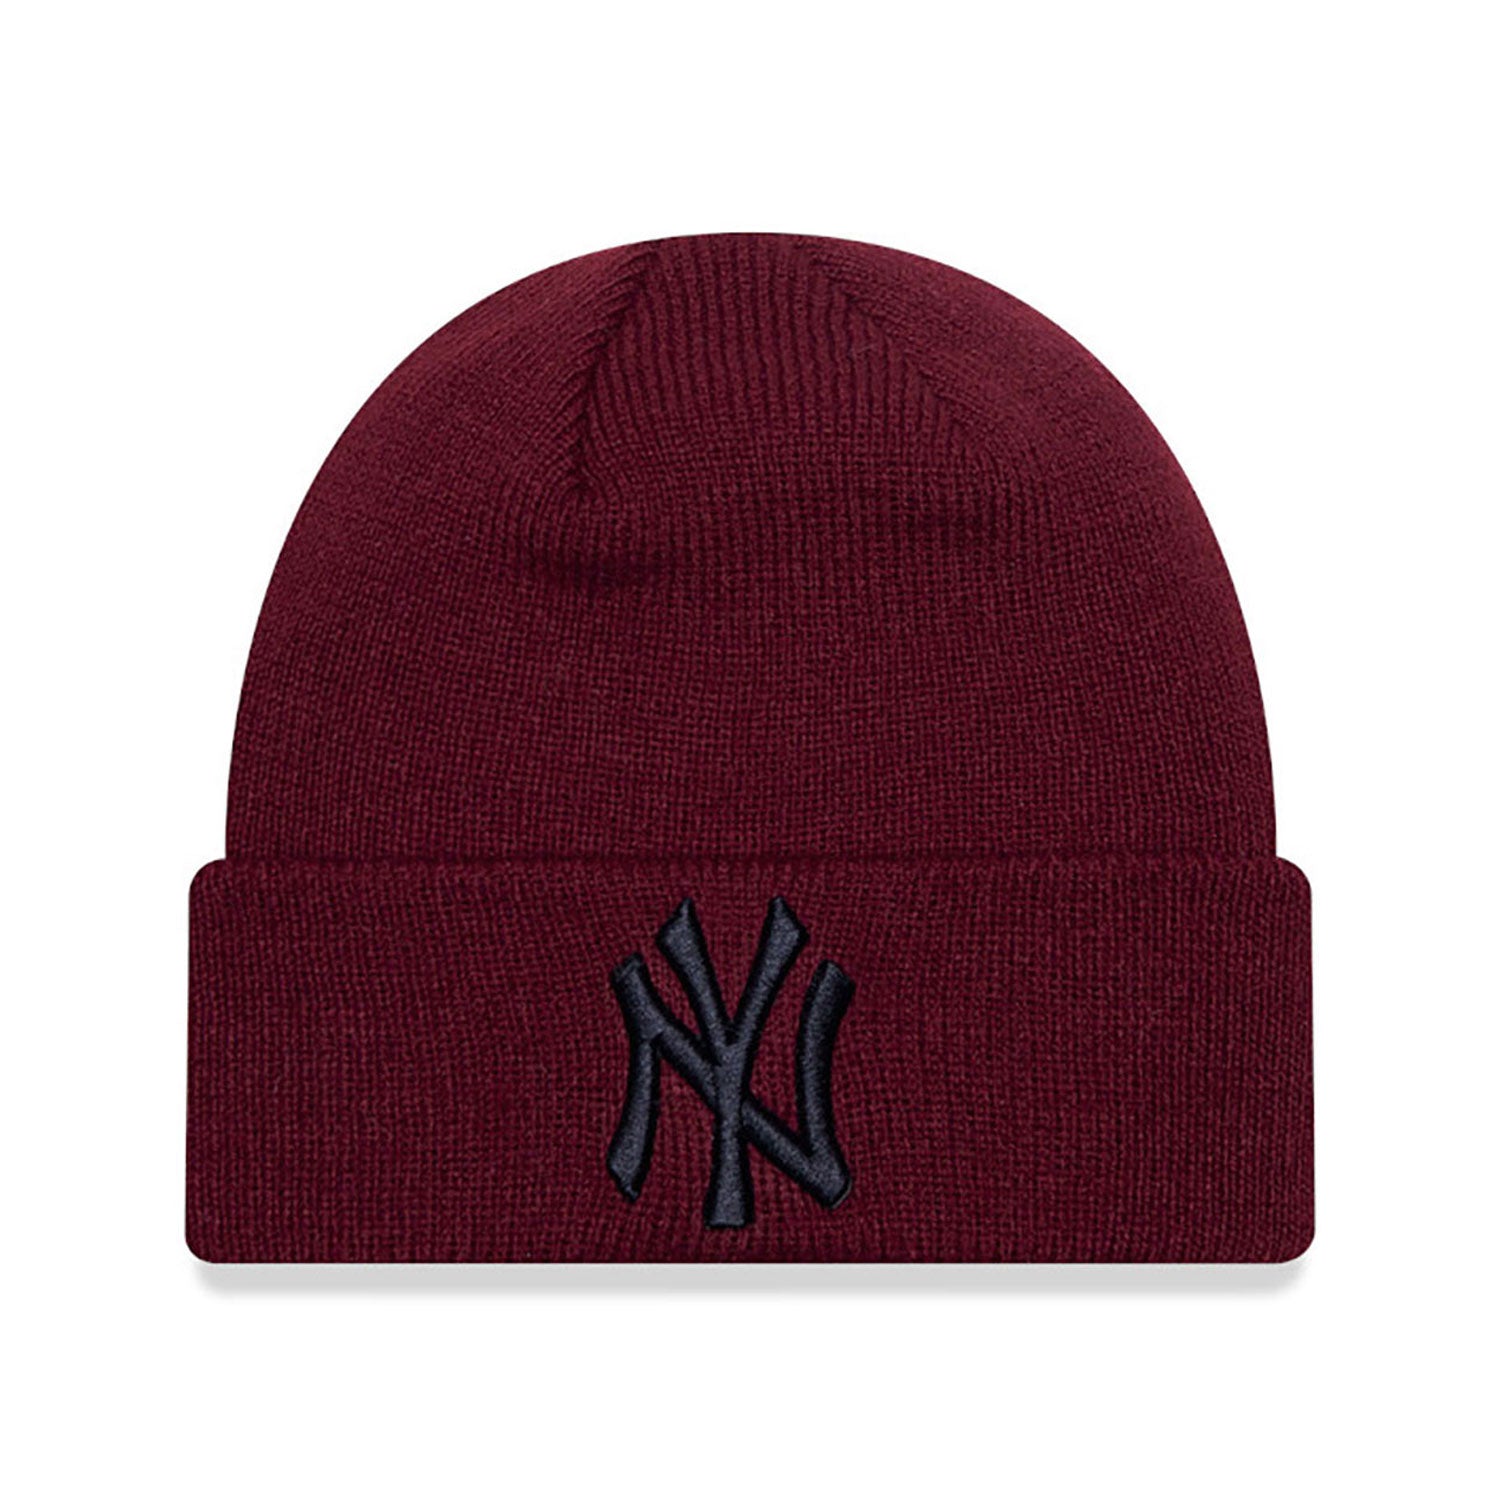 New Era bonnet kids NY Yankees 